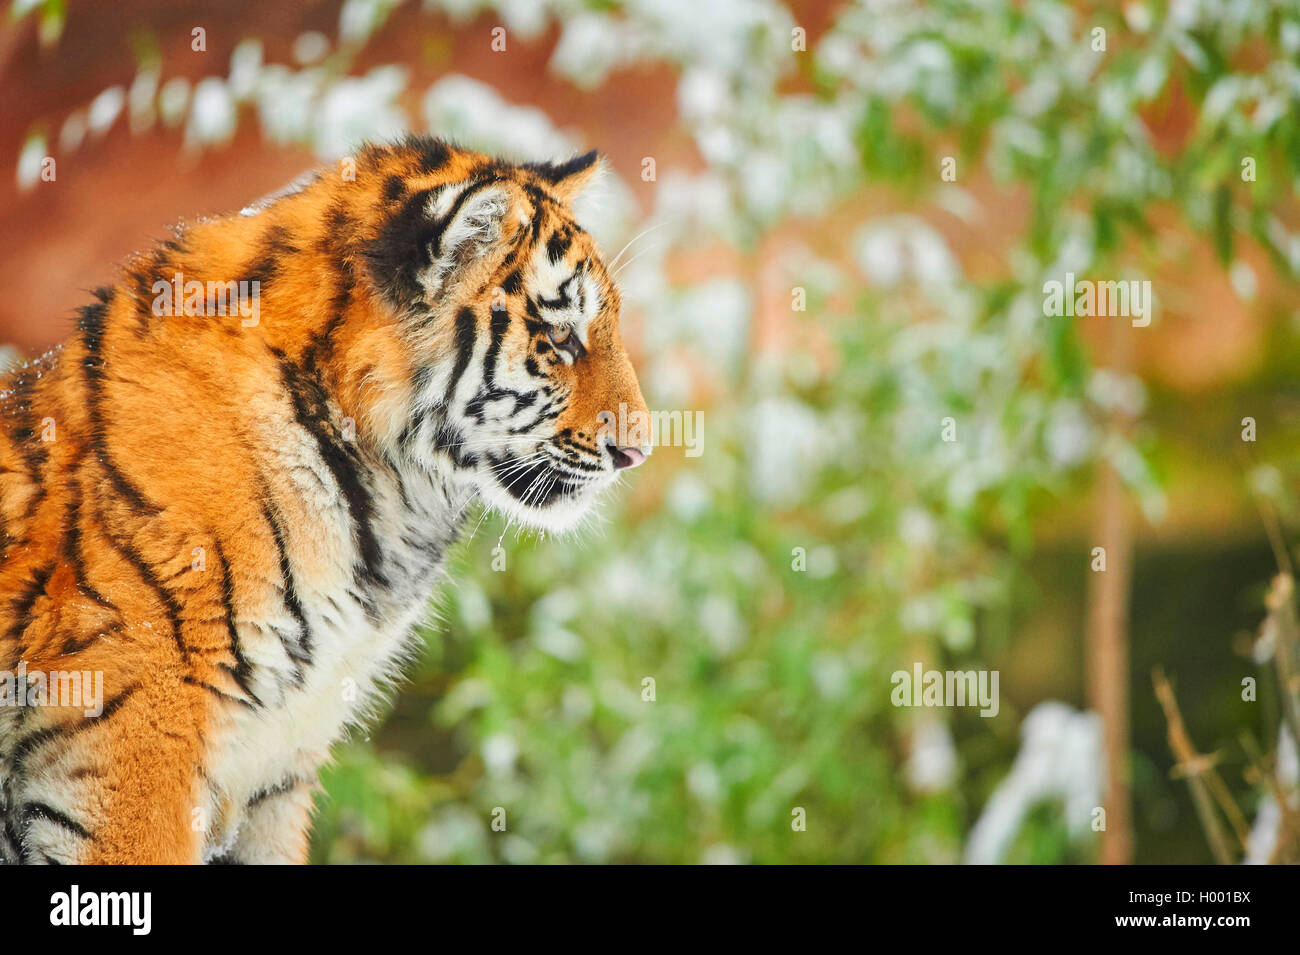 Tigre siberiano, Amurian tigre (Panthera tigris altaica), joven animal retrato en invierno, vista lateral Foto de stock